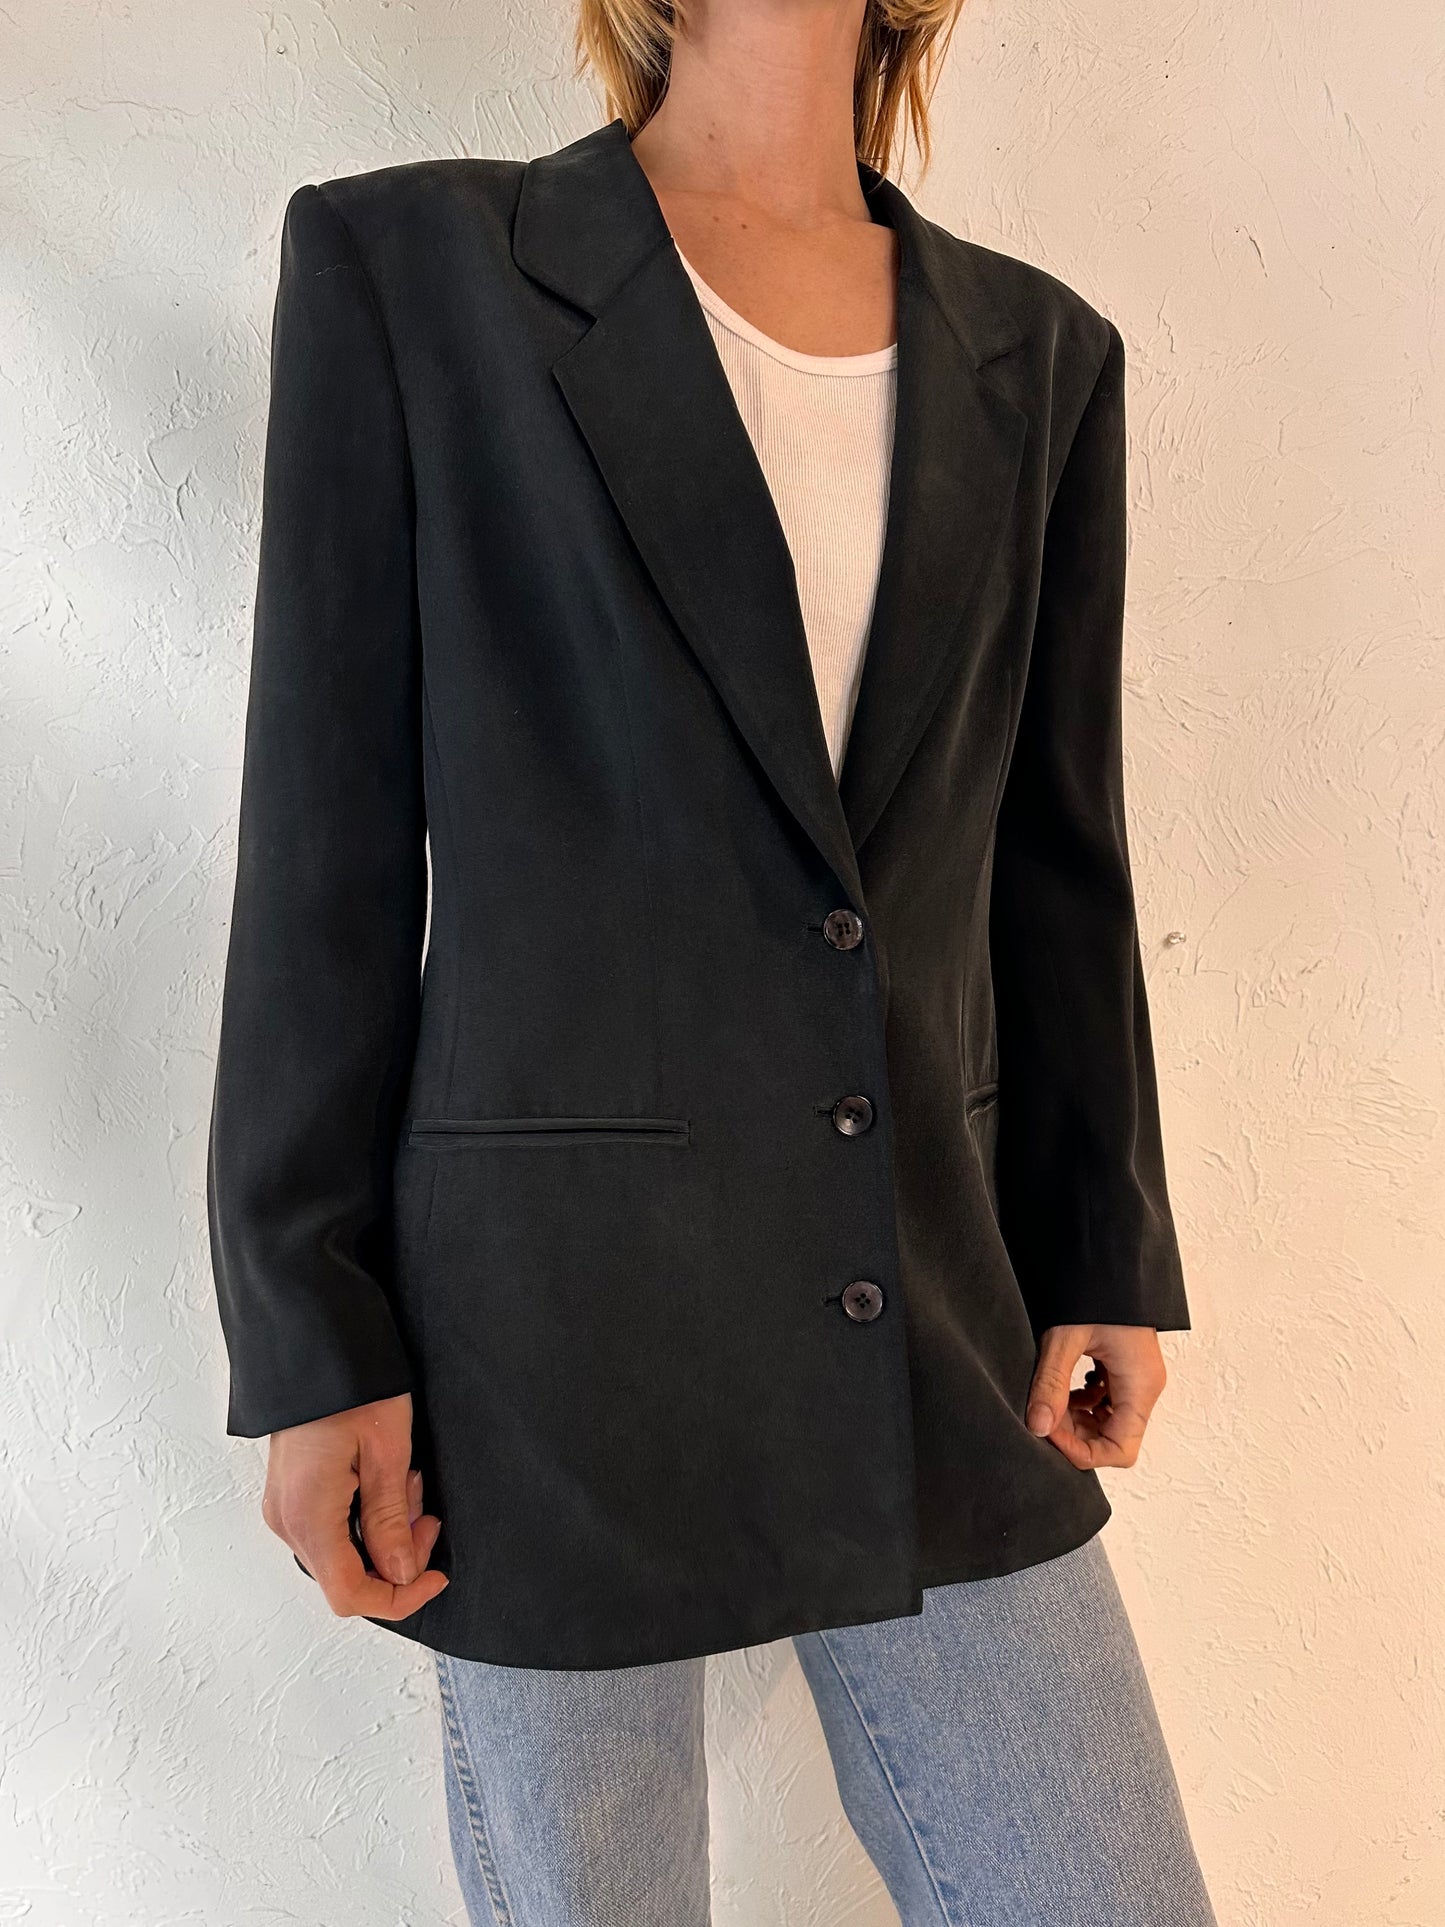 Y2k 'Jones New York' Black Silk Blazer Jacket / Medium